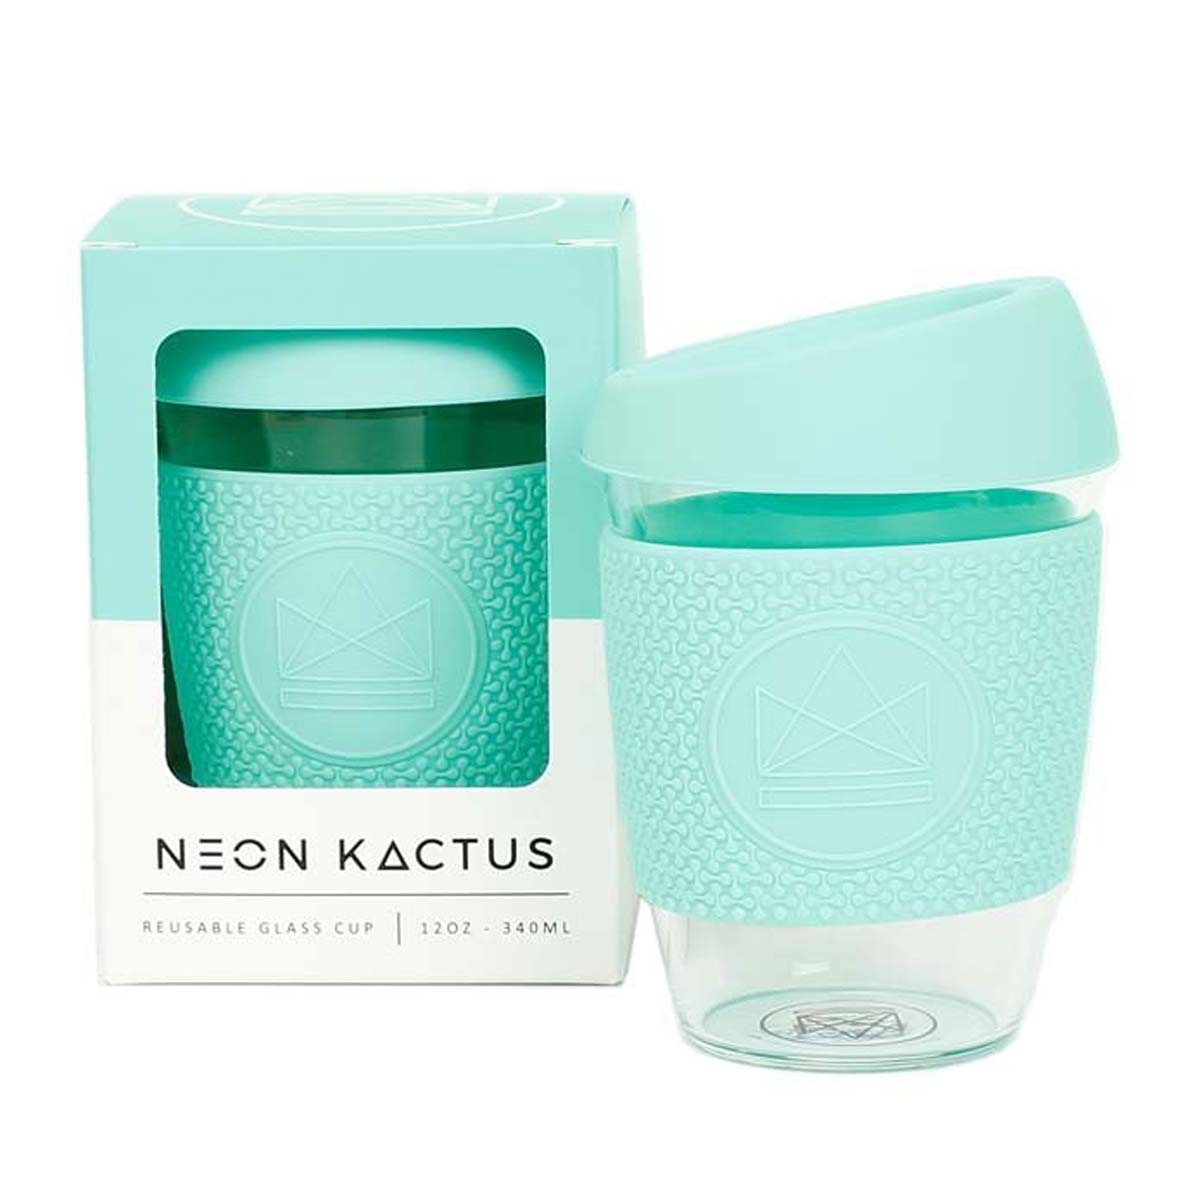 Neon Kactus Green Glass Reusable Cup